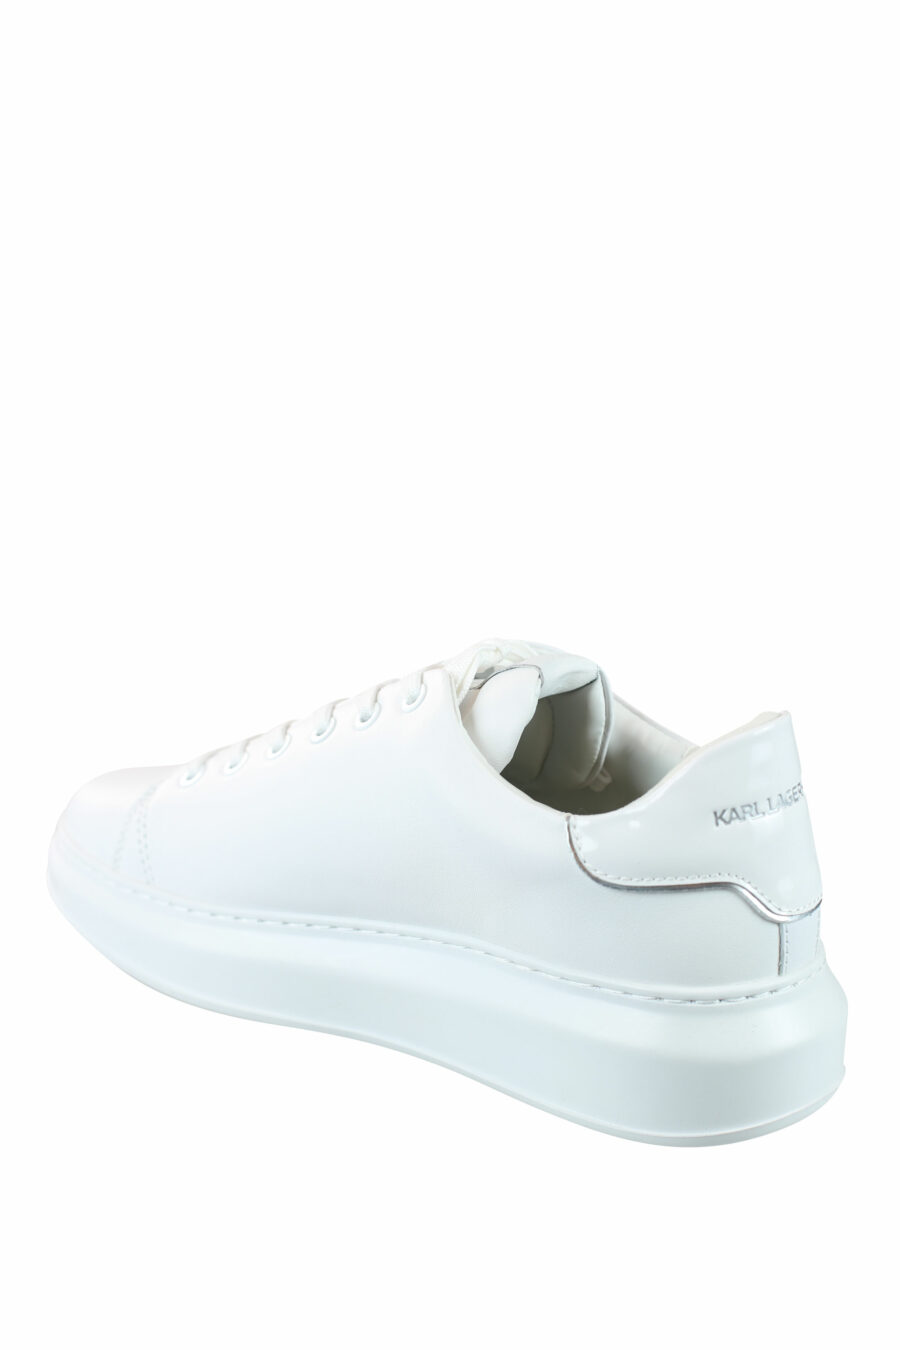 Zapatillas blancas con logo "rue st guillaume" blanco - IMG 0027